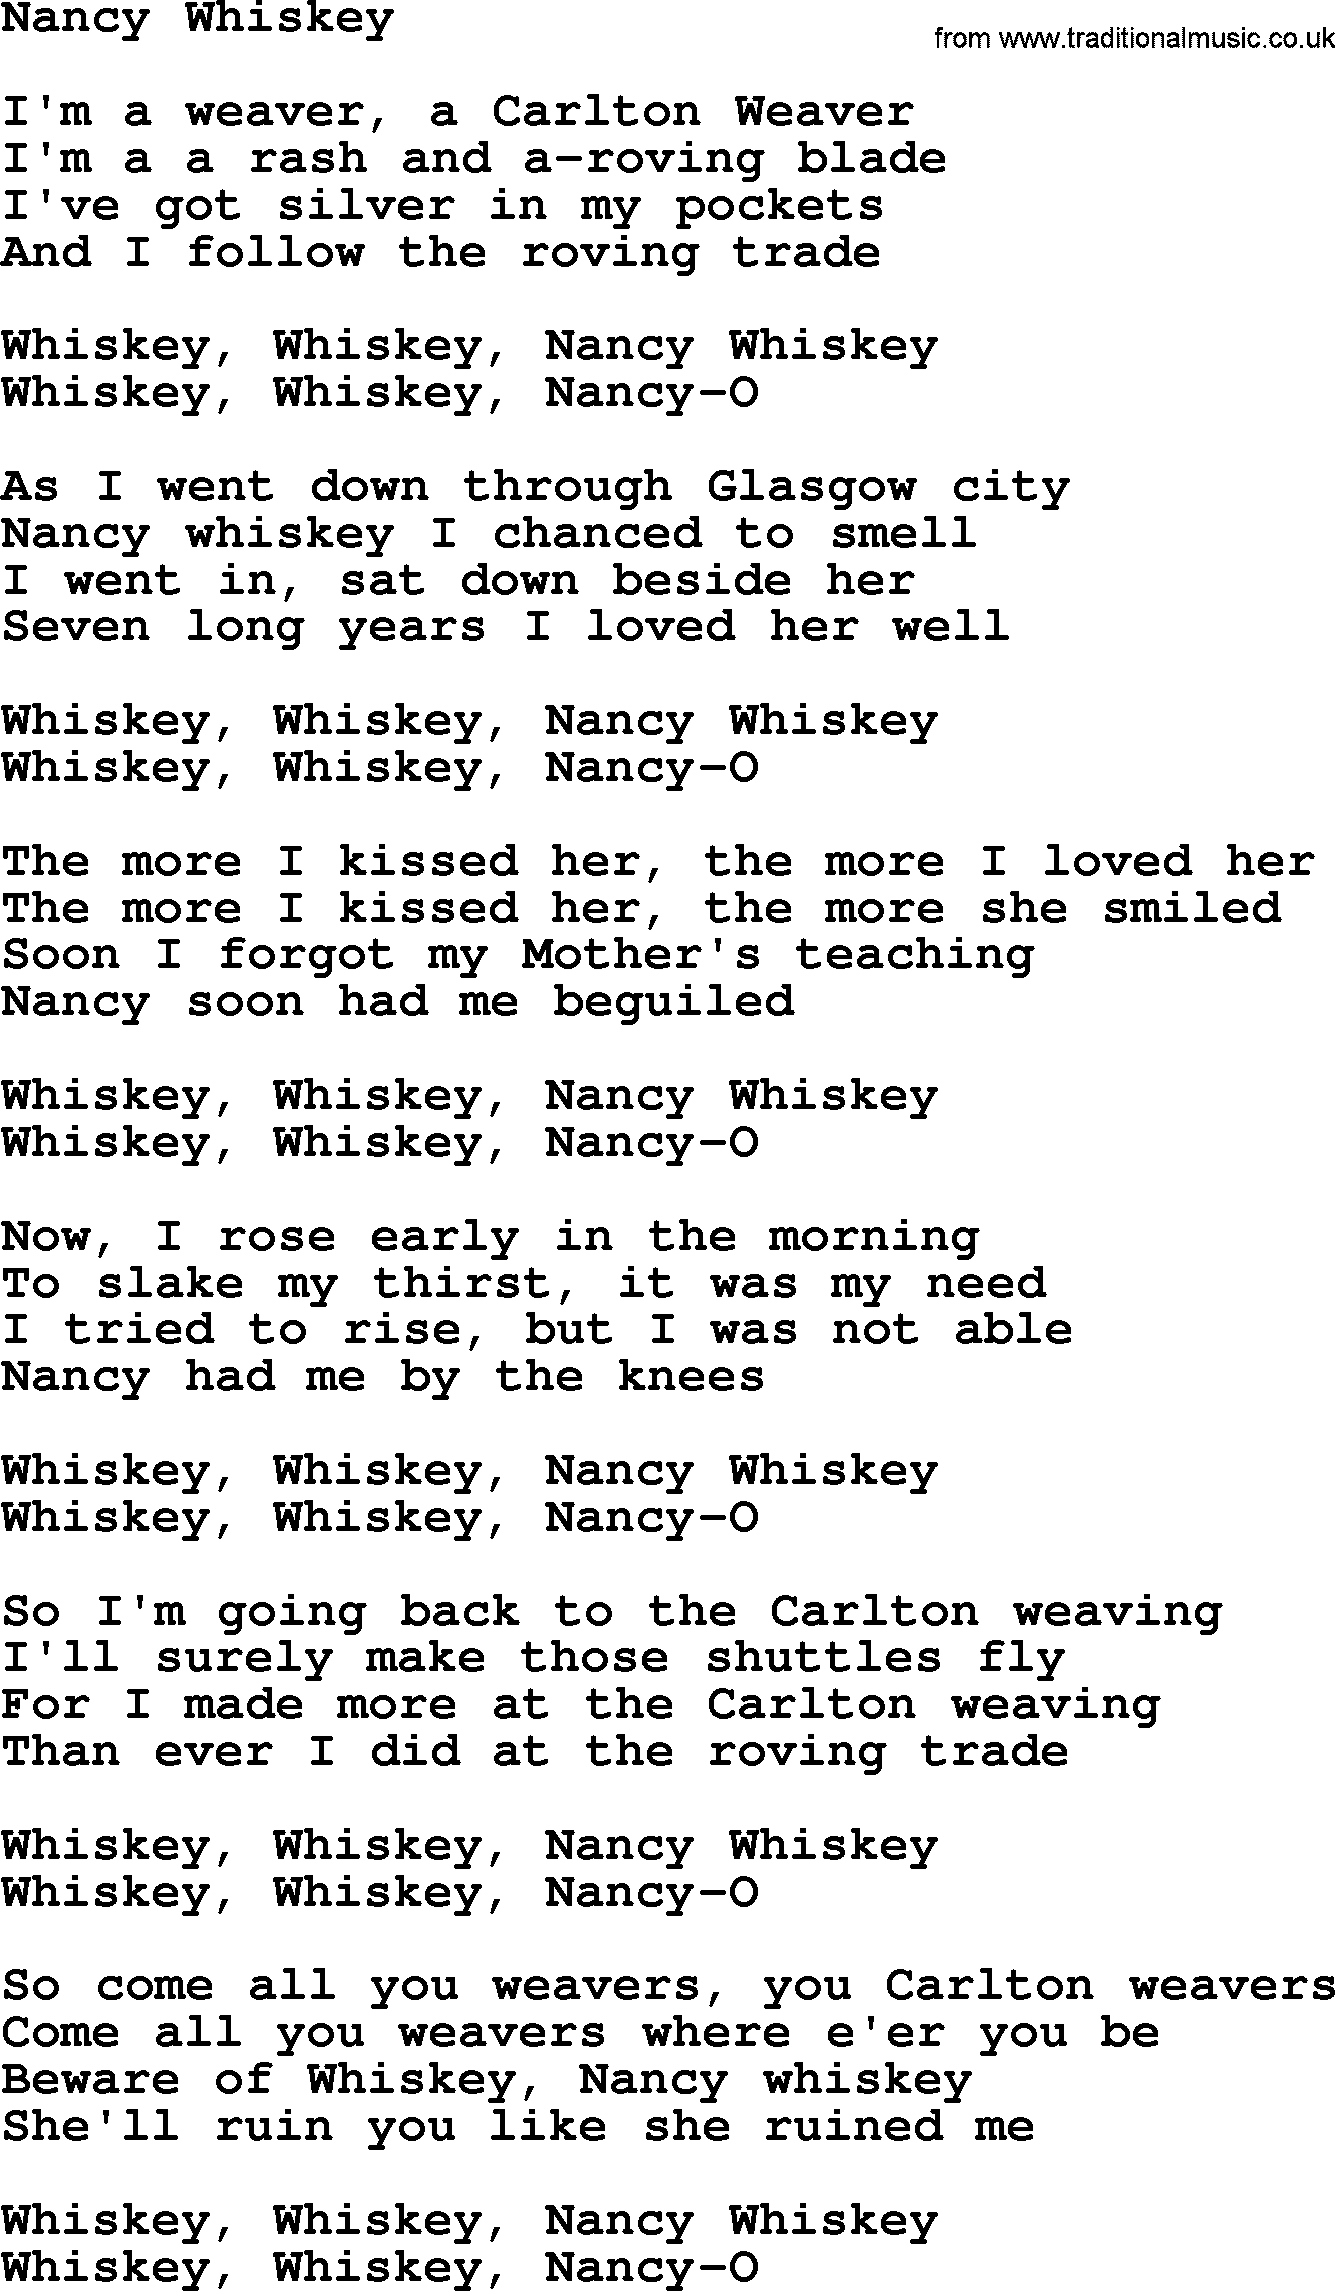 The Dubliners song: Nancy Whiskey, lyrics